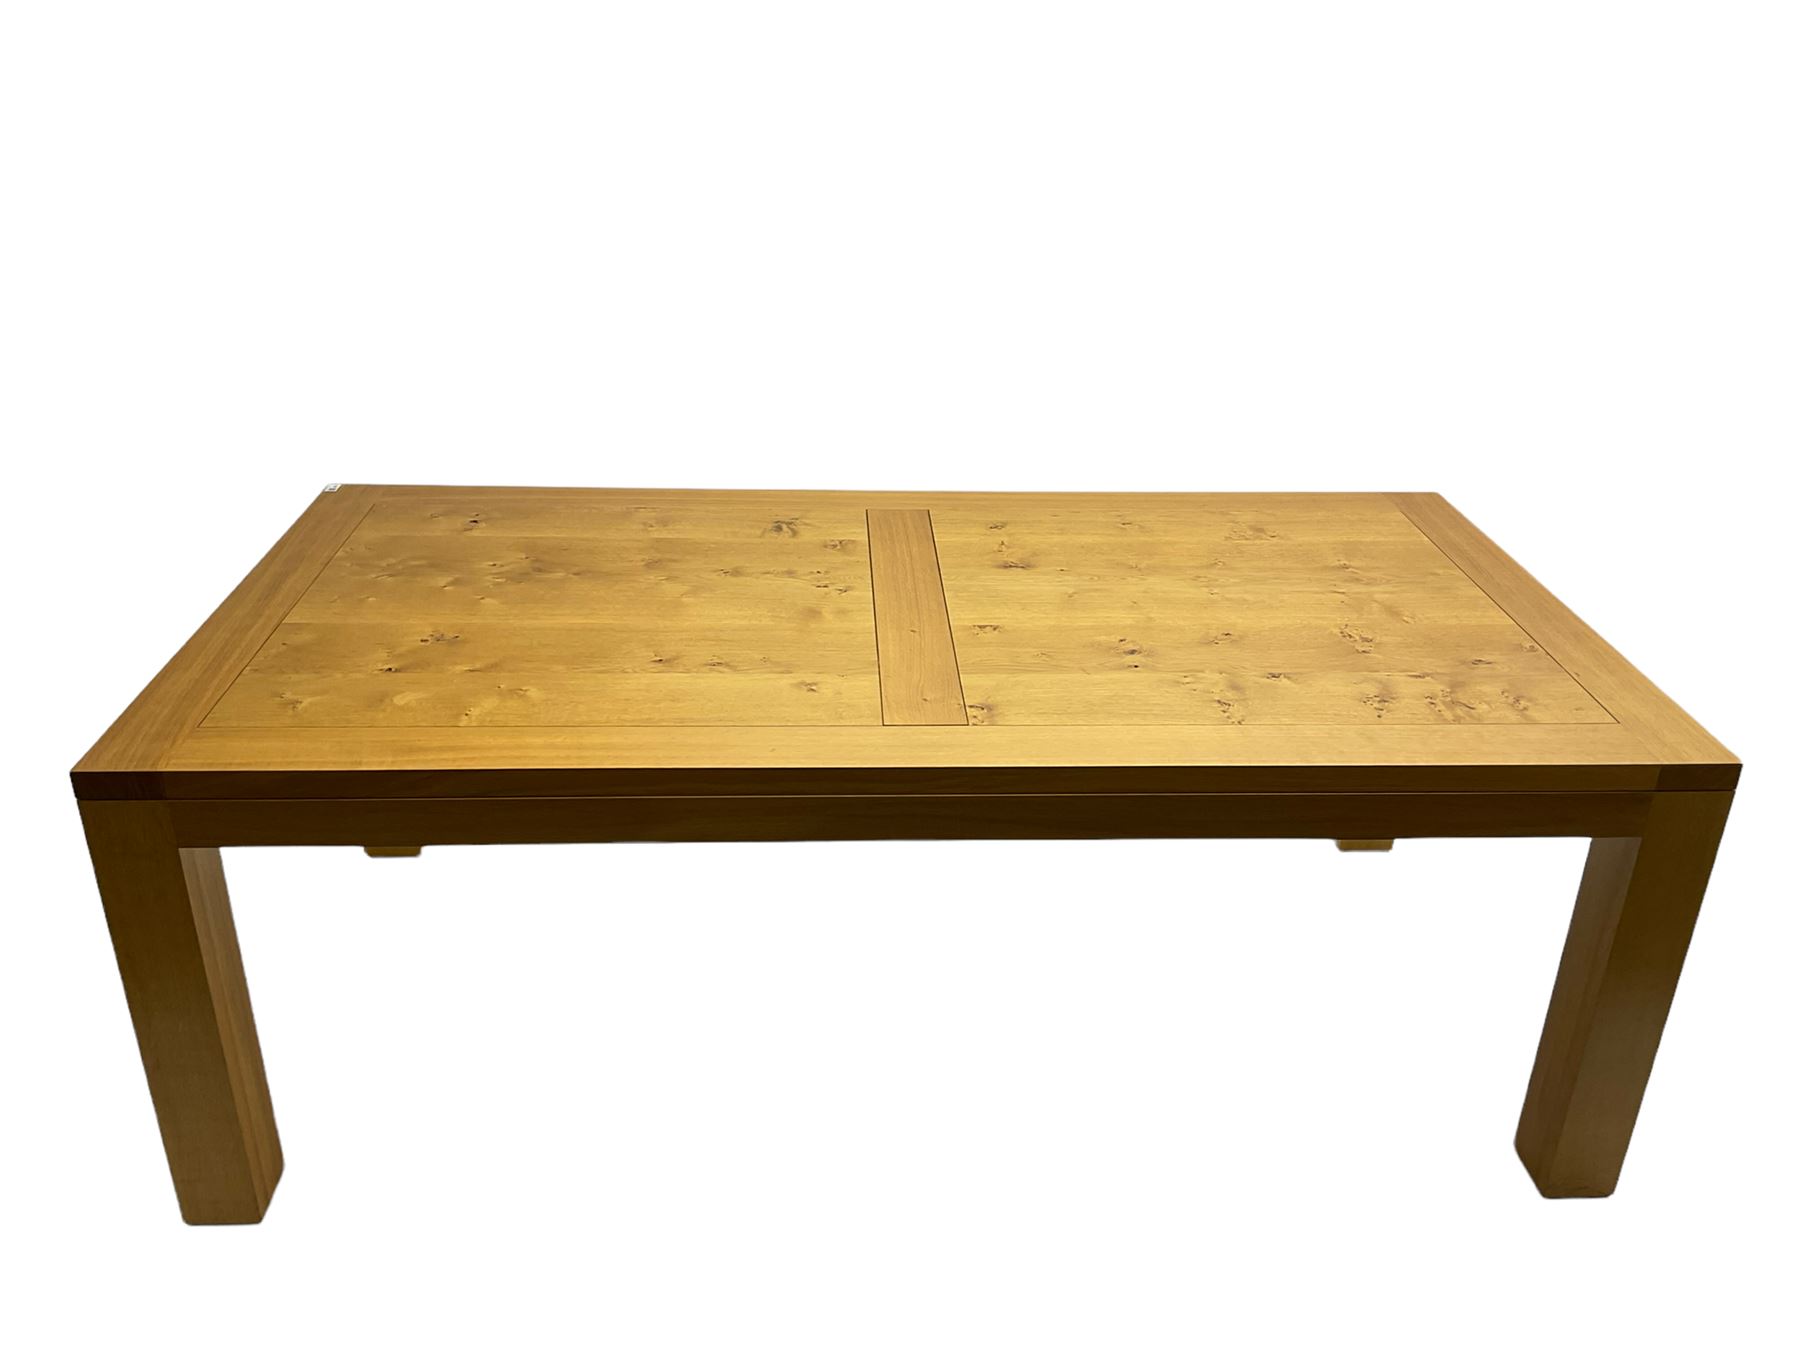 Large pippy oak rectangular dining table - Image 10 of 13